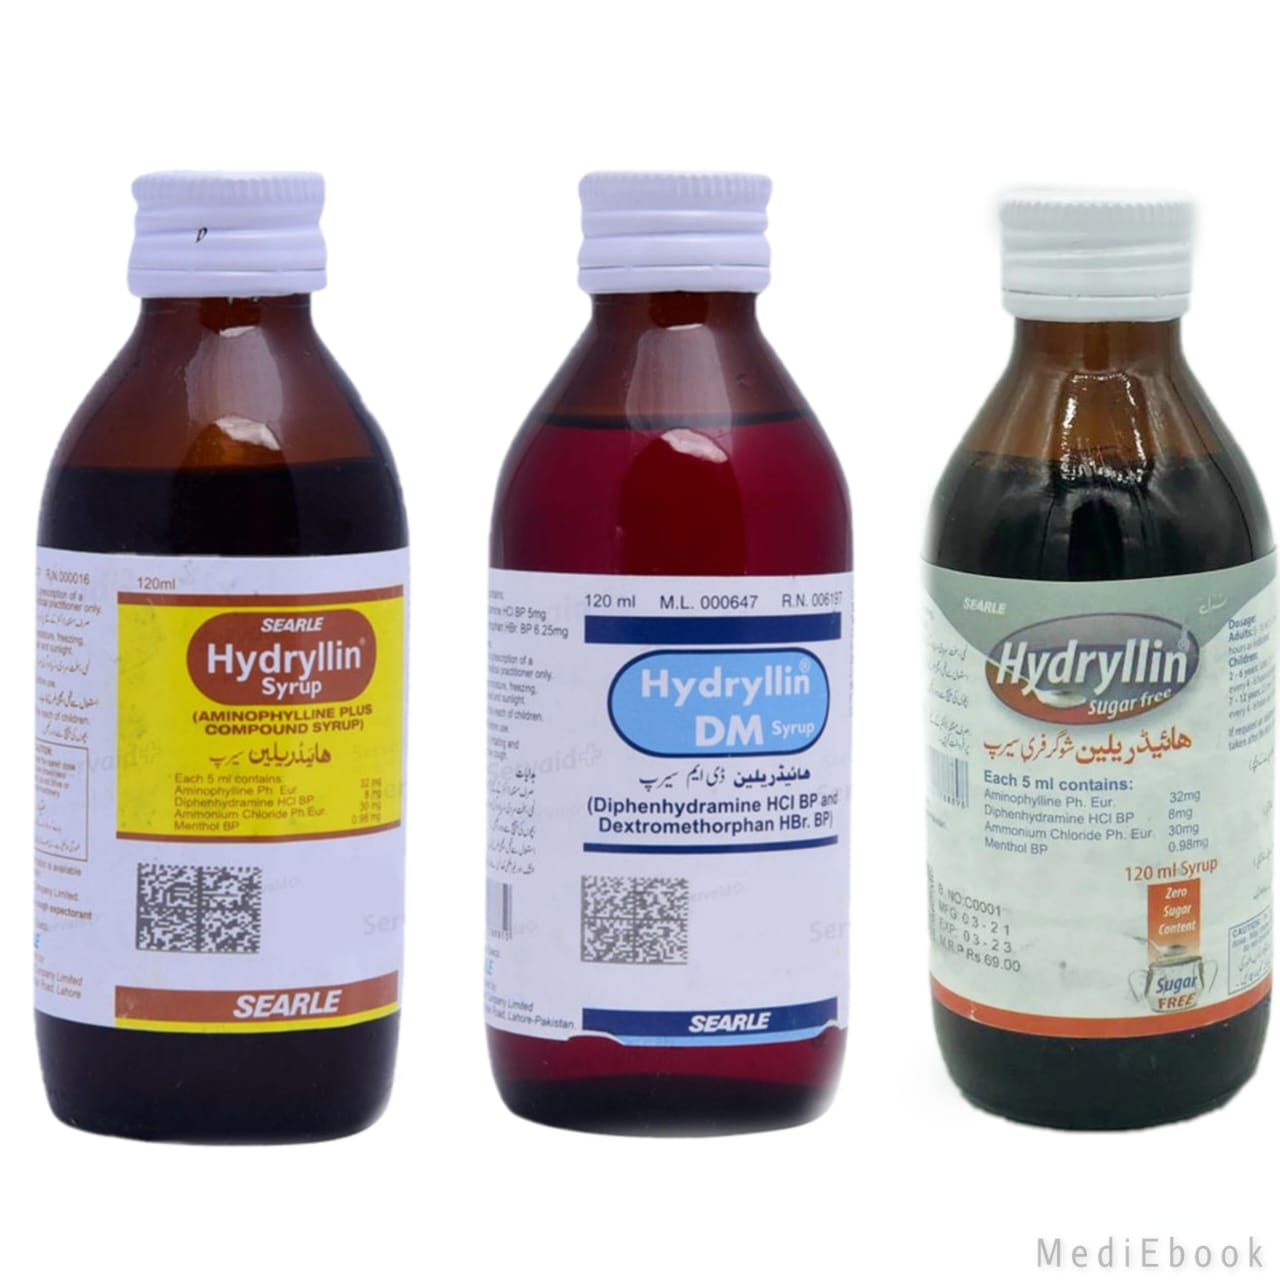 Is Hydryllin Syrup Safe in Pregnancy